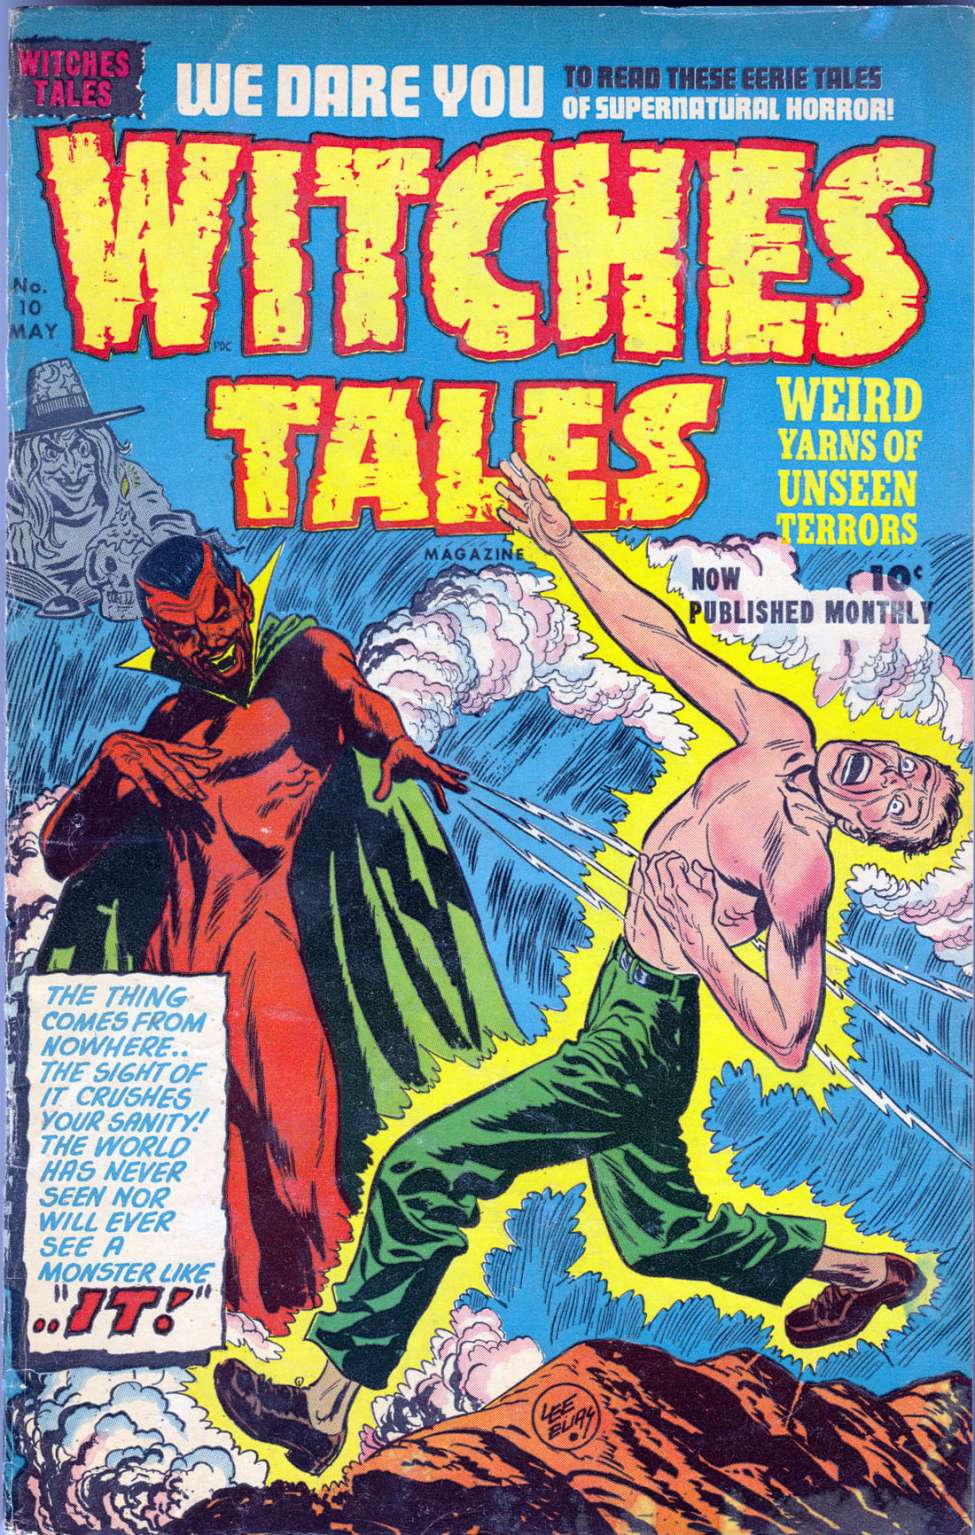 Witches Tales 10 (alt) - Version 2 (Harvey Comics)